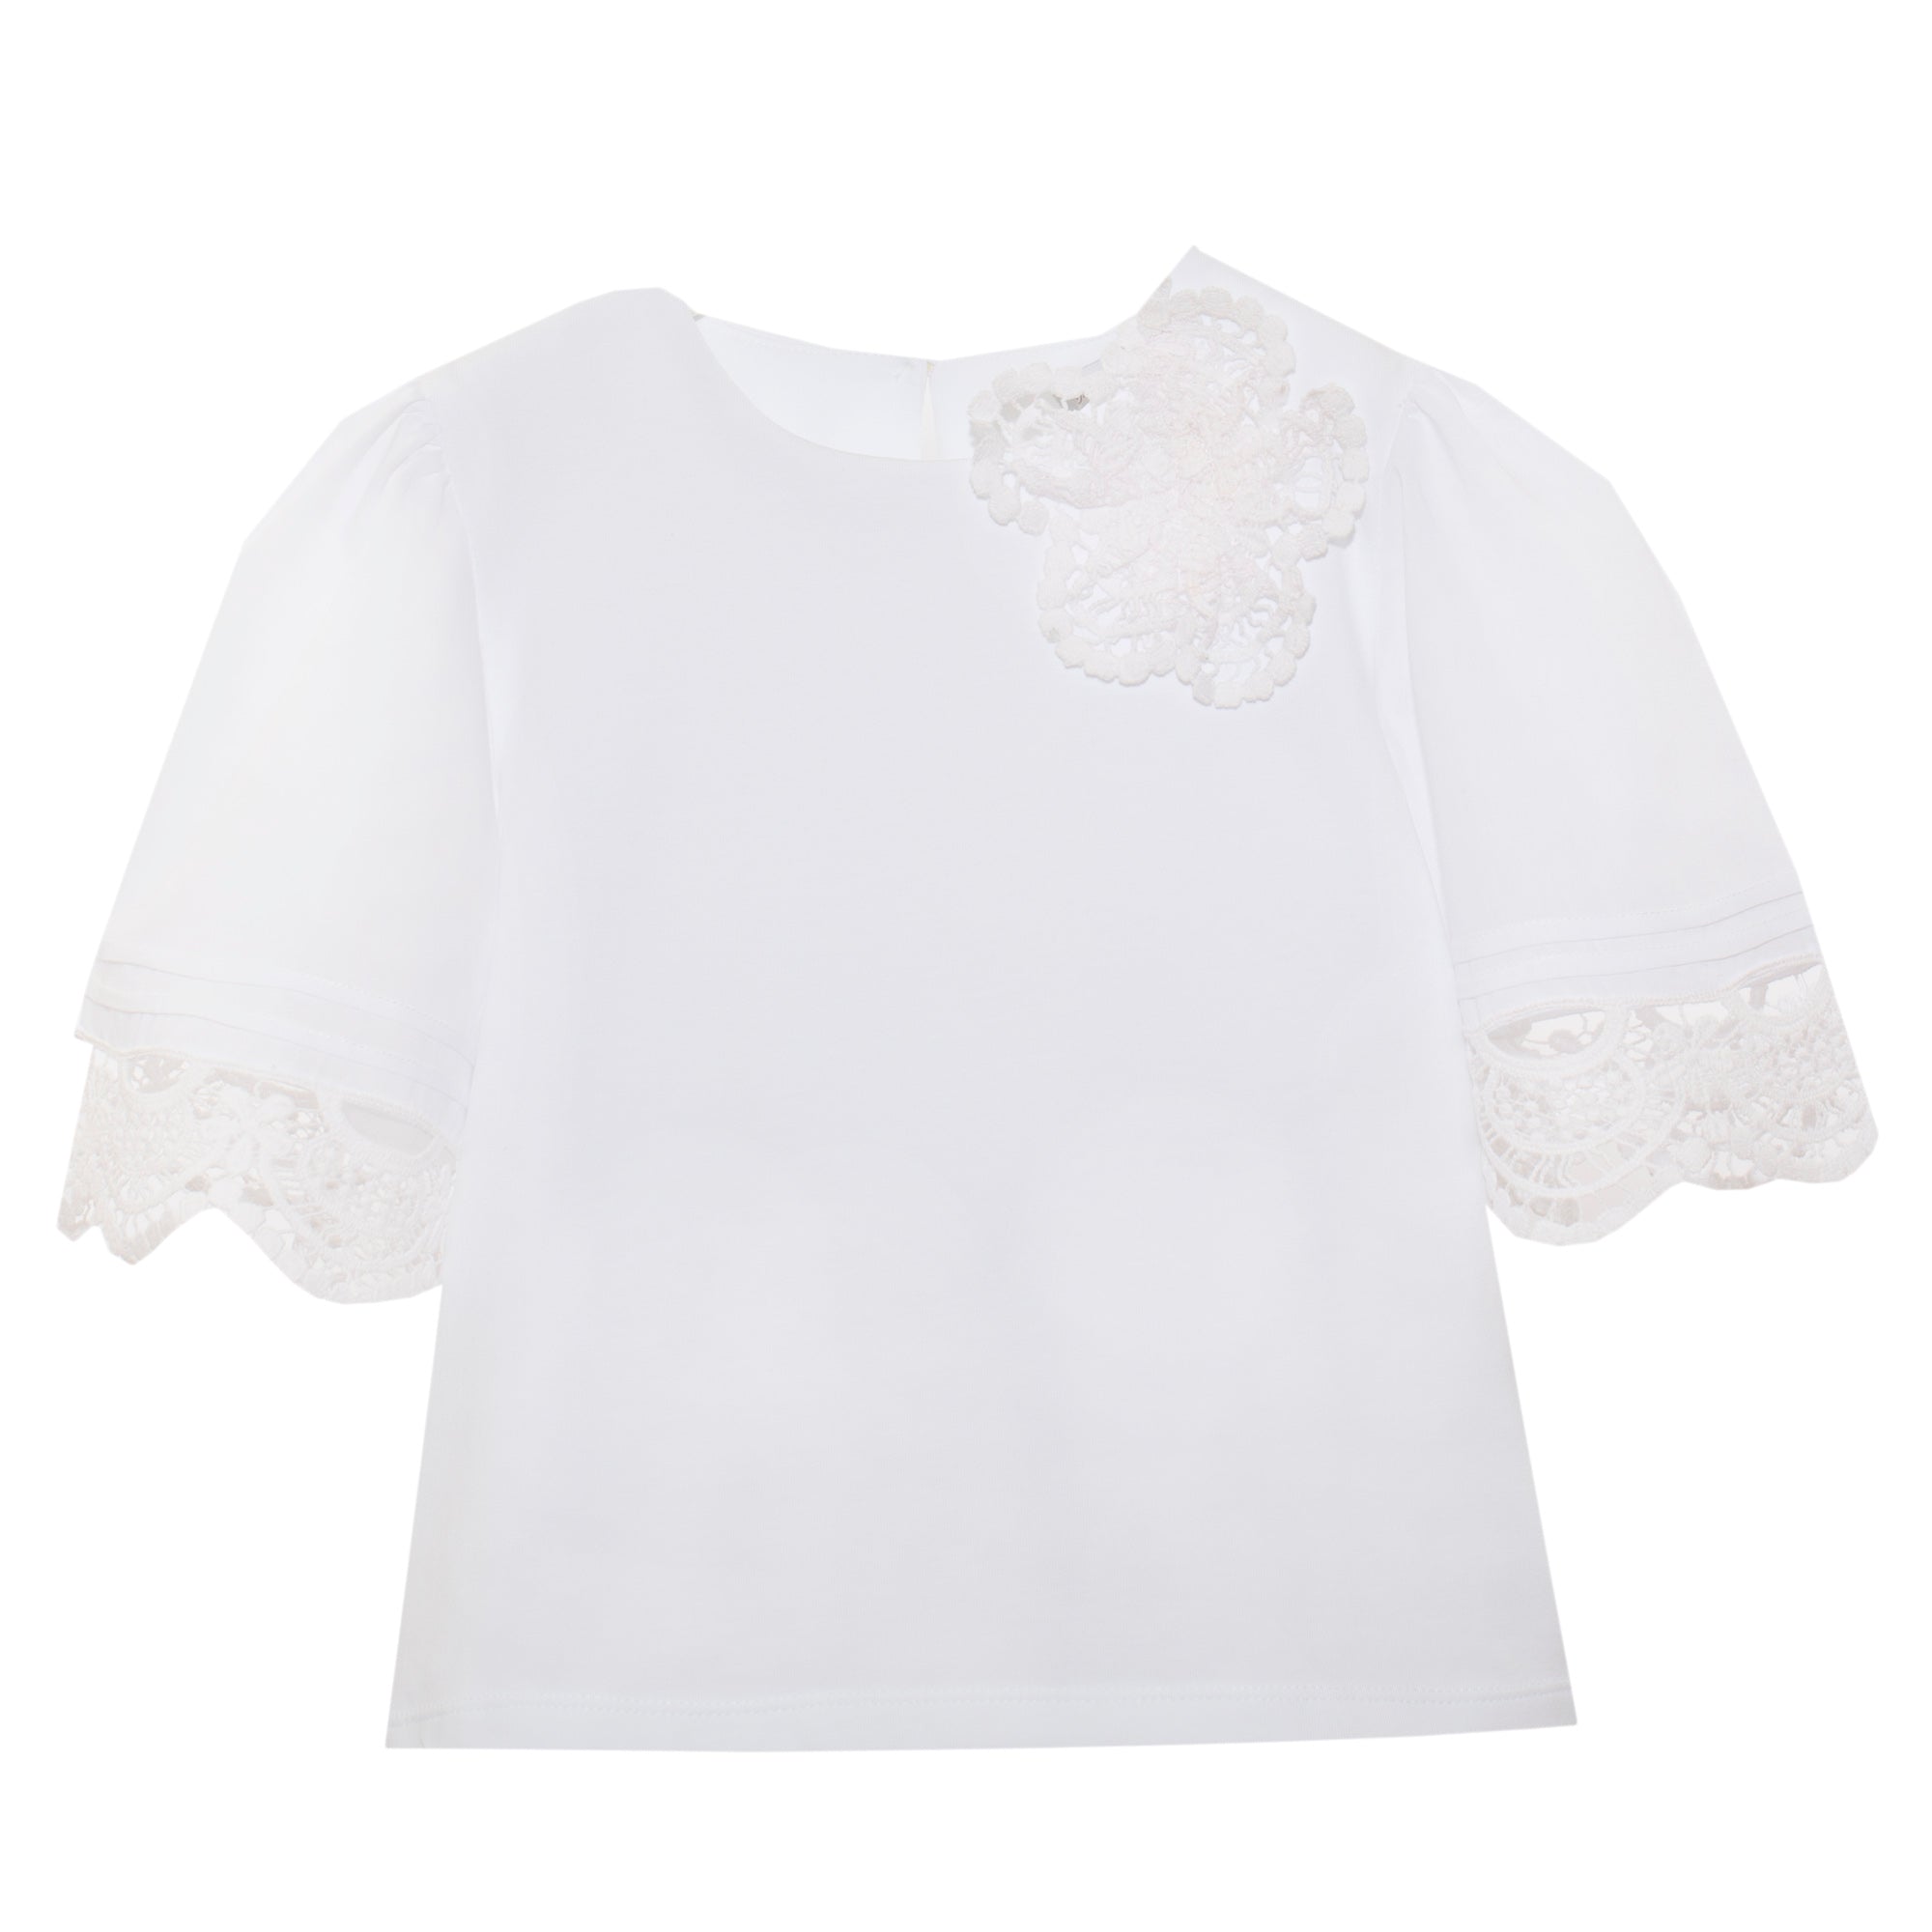 Patachou white eyelet blouse top for girls